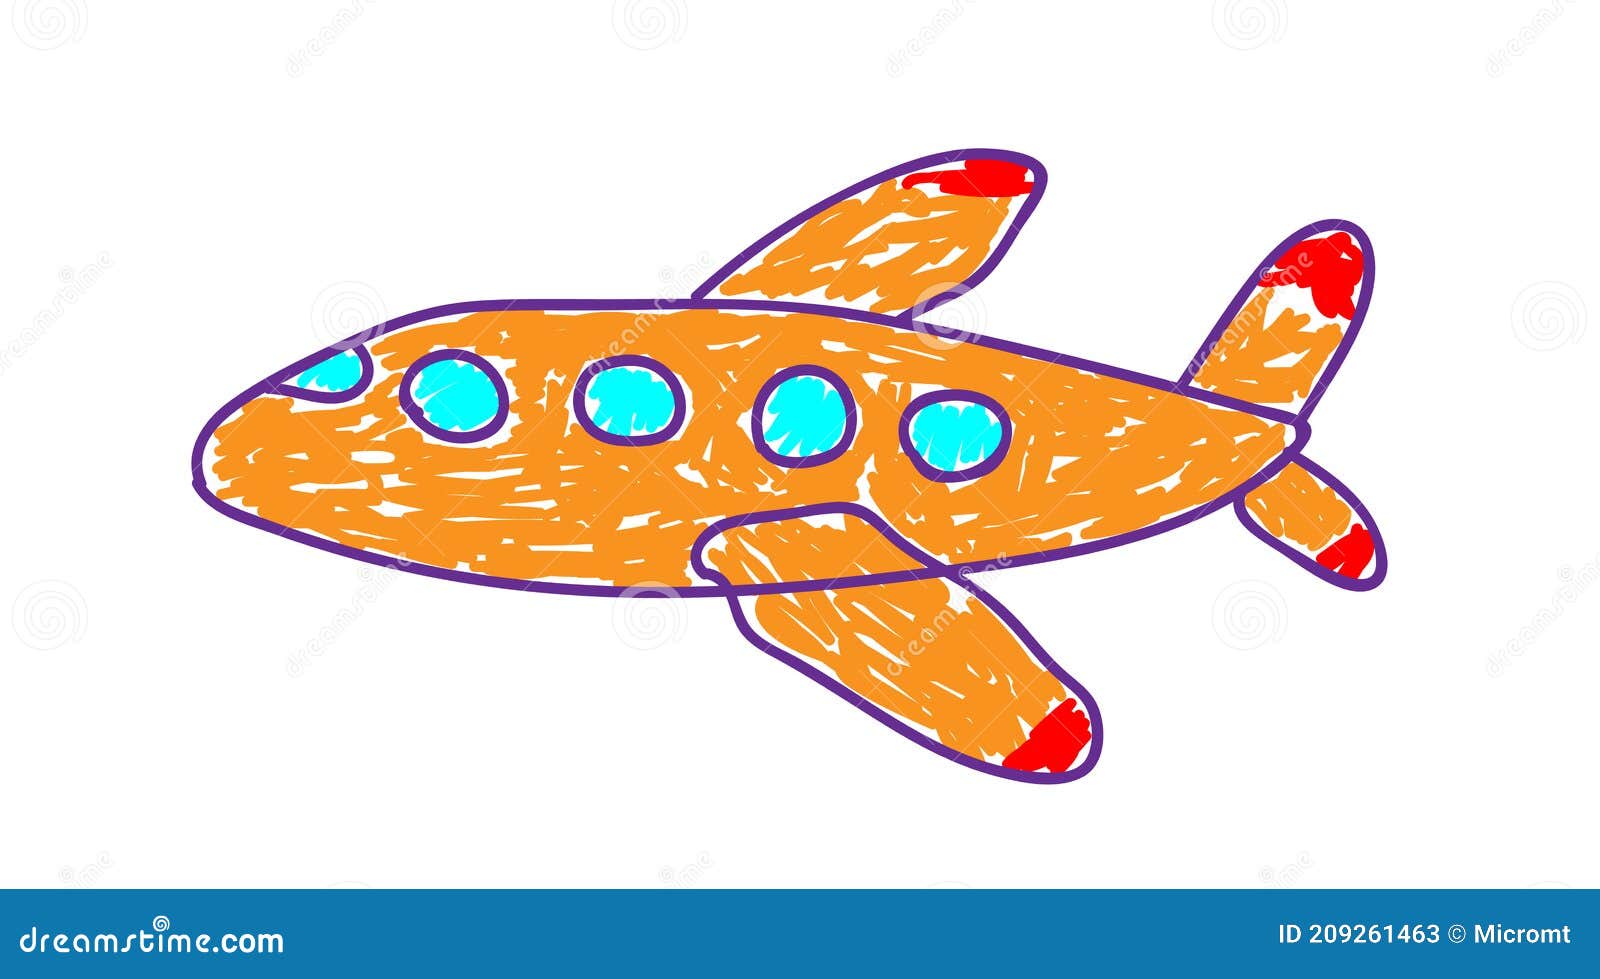 Avião Laranja, No Estilo Deliberadamente Infantil. Desenho